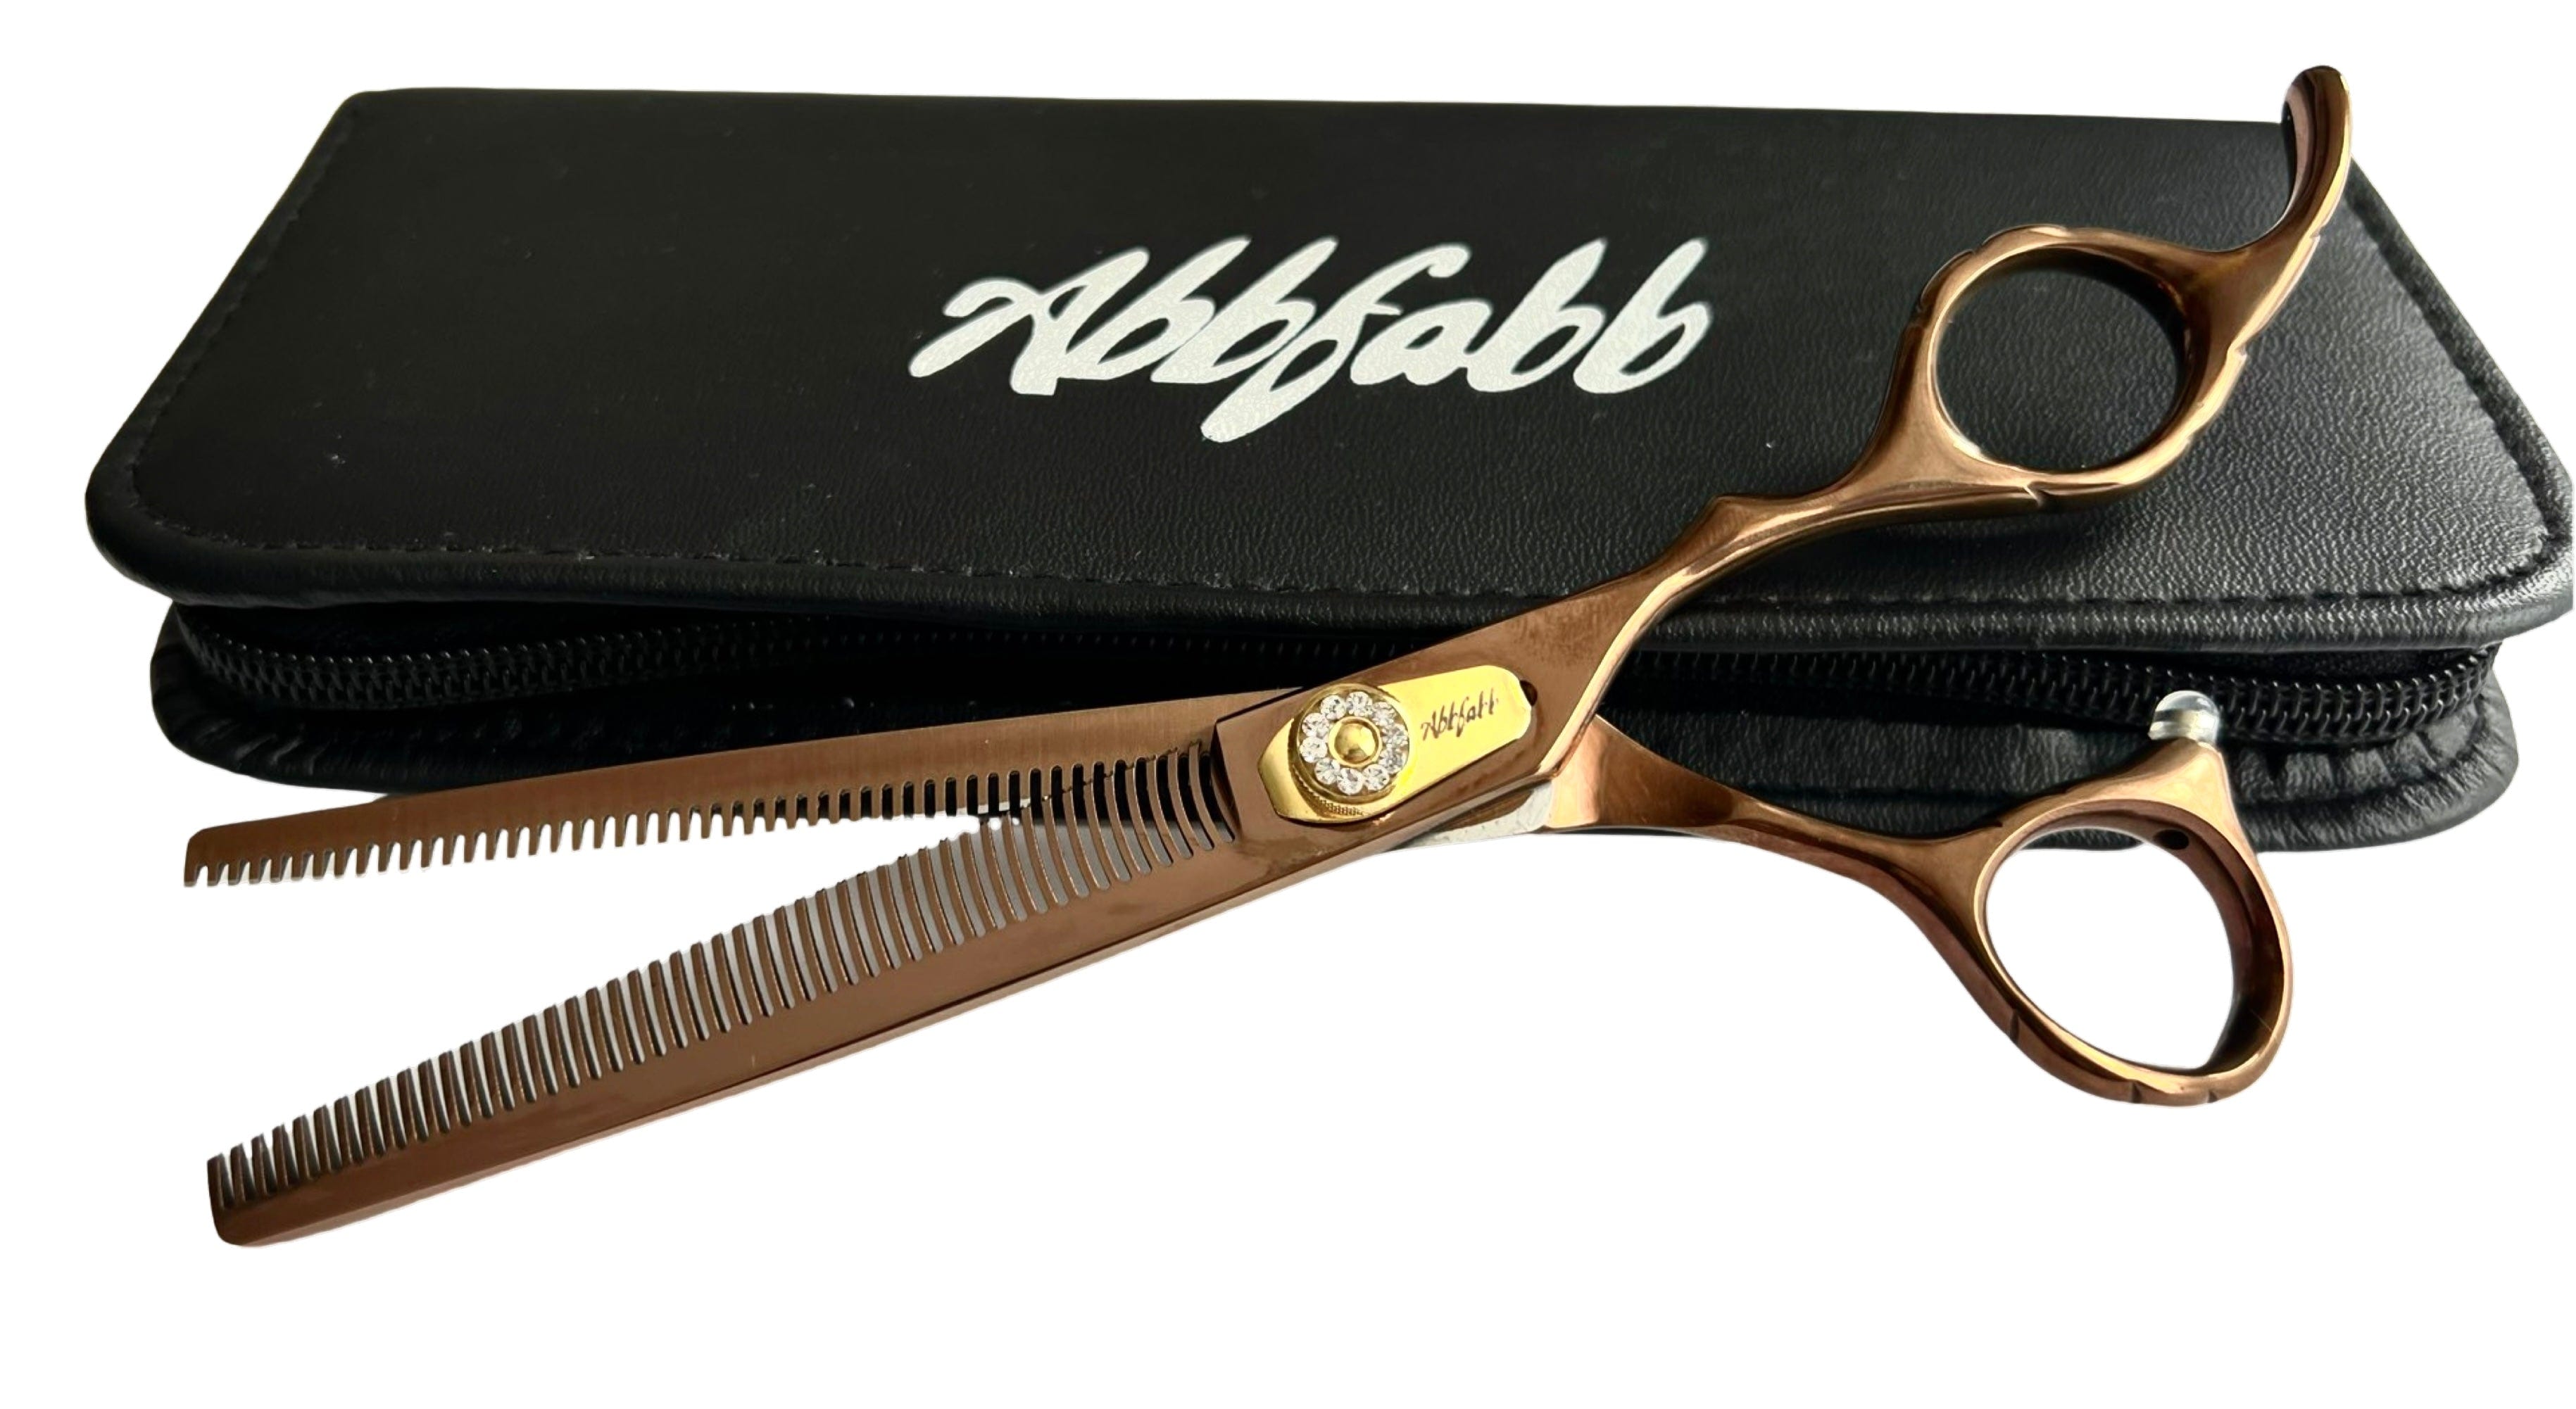 Abbfabb Grooming Scissors Ltd 7" with 48 Micro Serrated Double edge Blending Dog Grooming Scissor